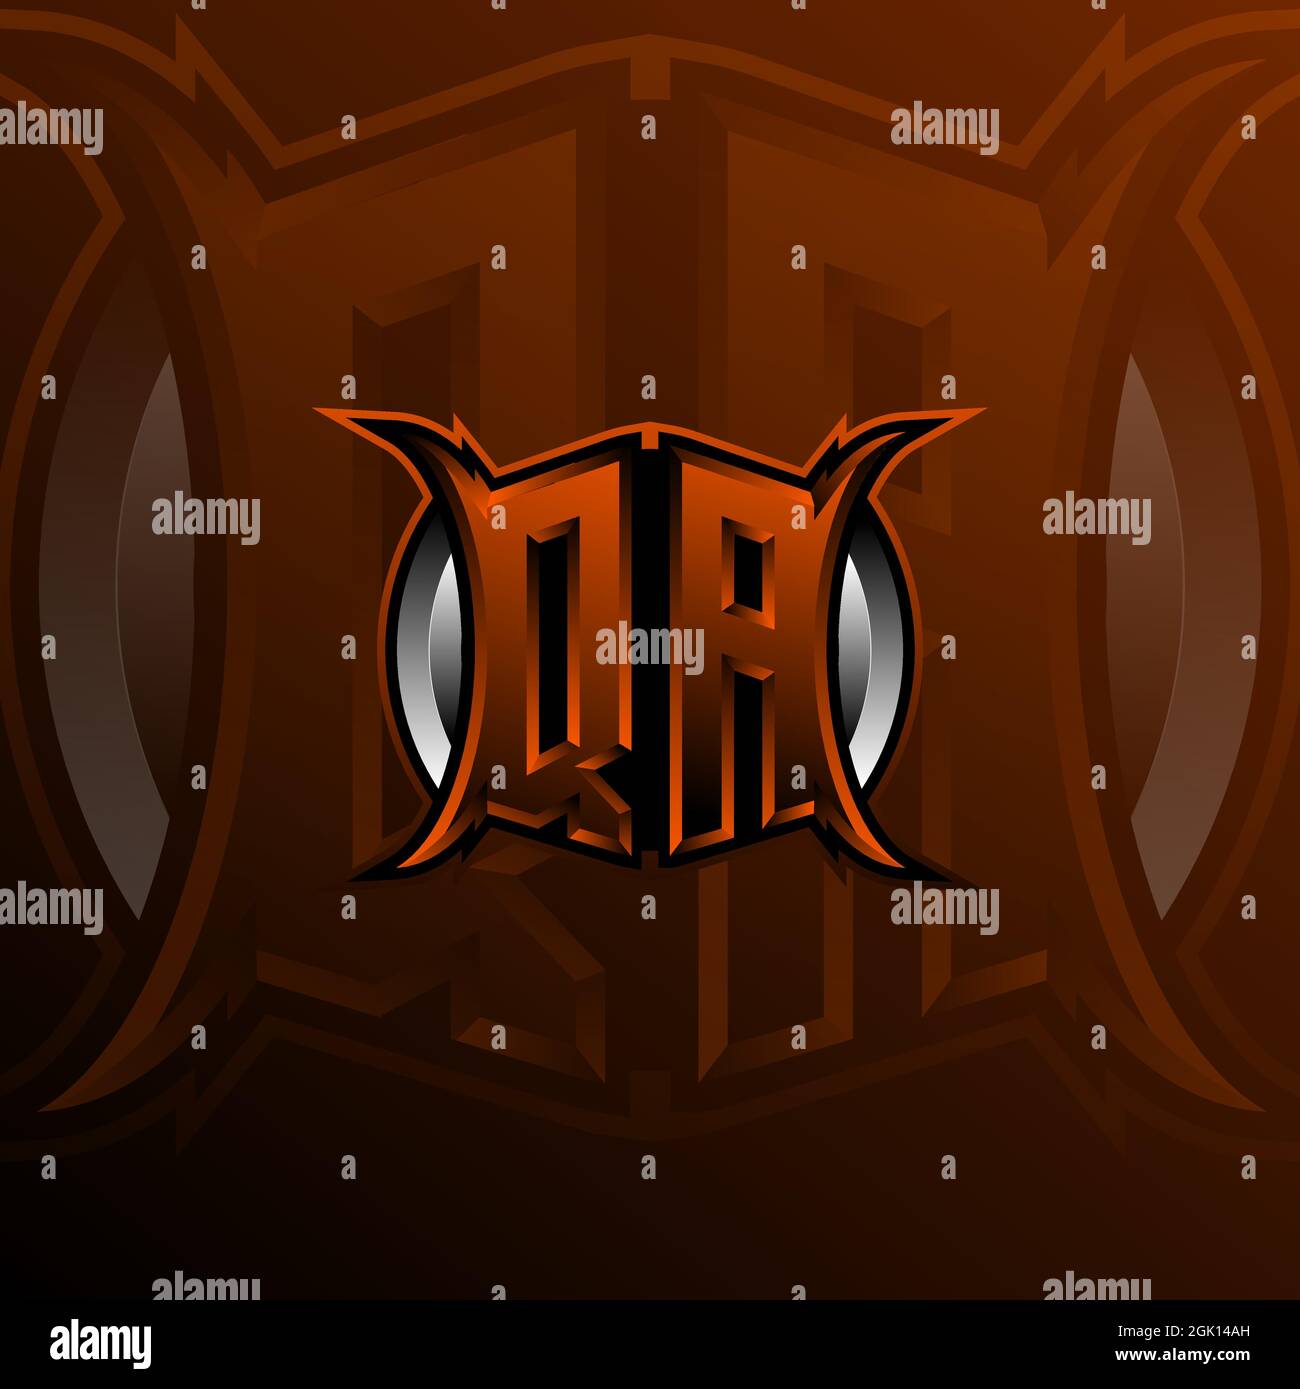 QA Logo Letter Design in Orange Color, Logo for game, esport, initial gaming, community or business. Stock Vector